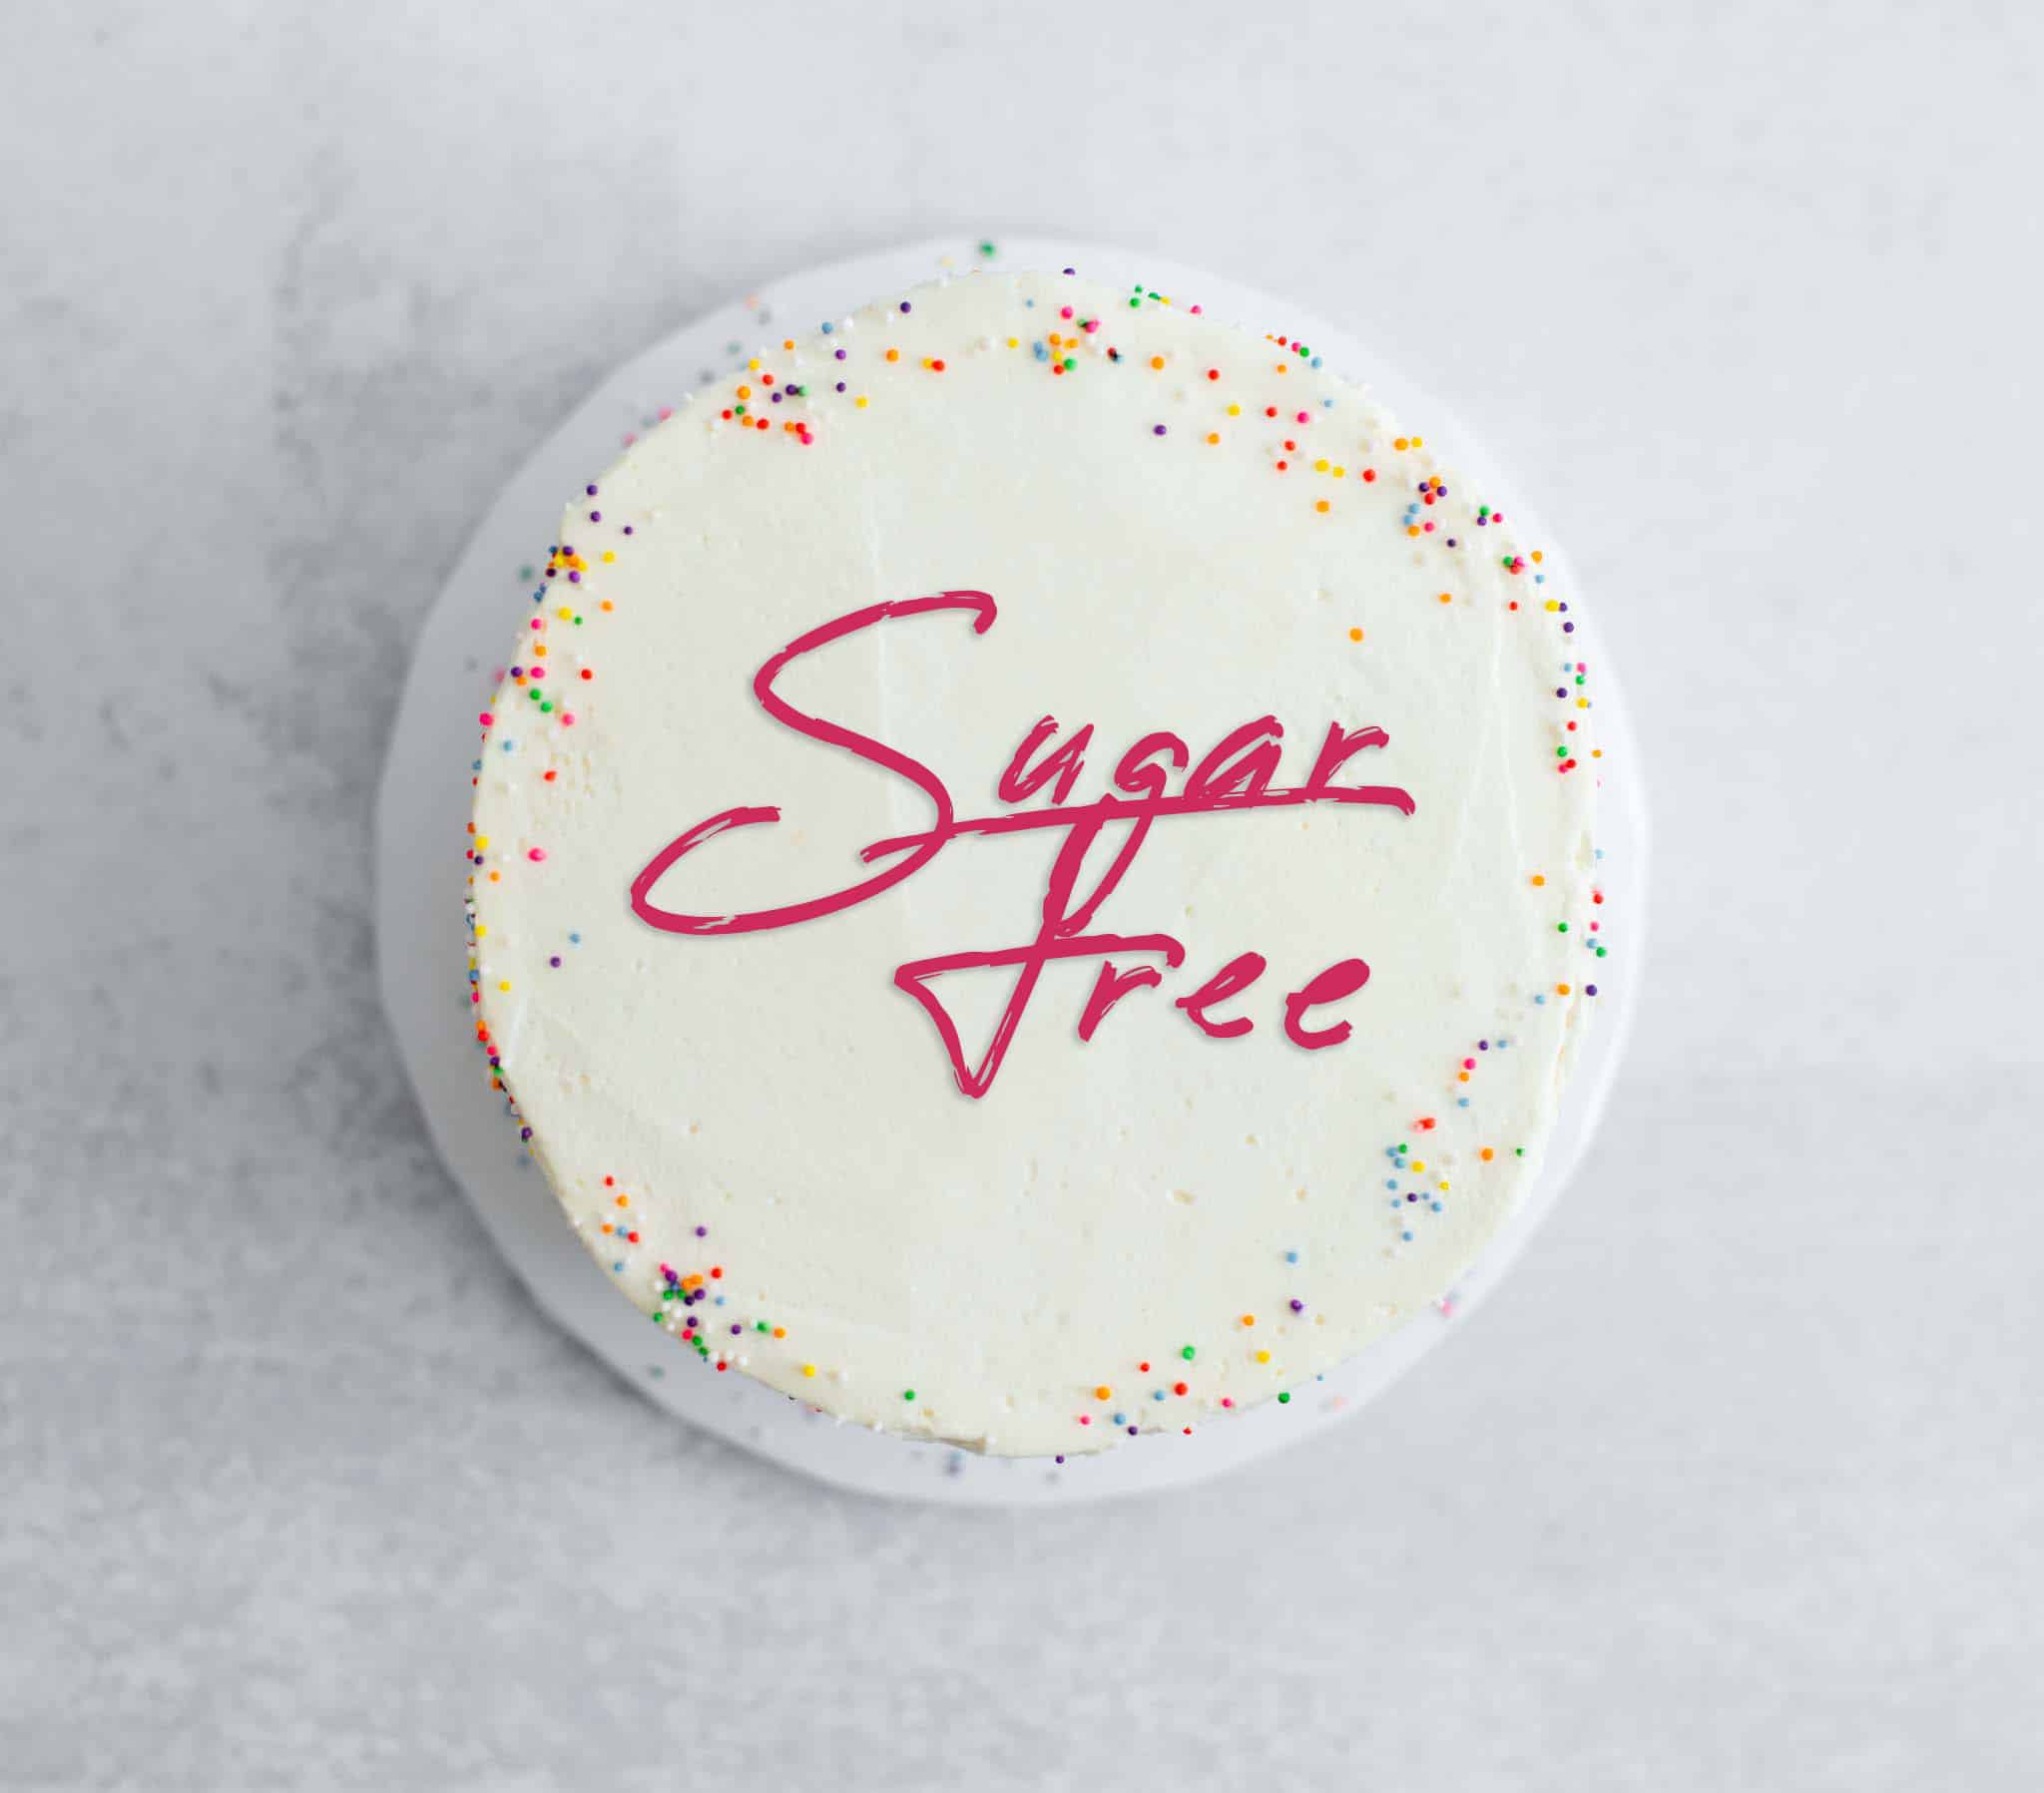 Make A Sugar-Free Birthday Cake Everyone Will Love